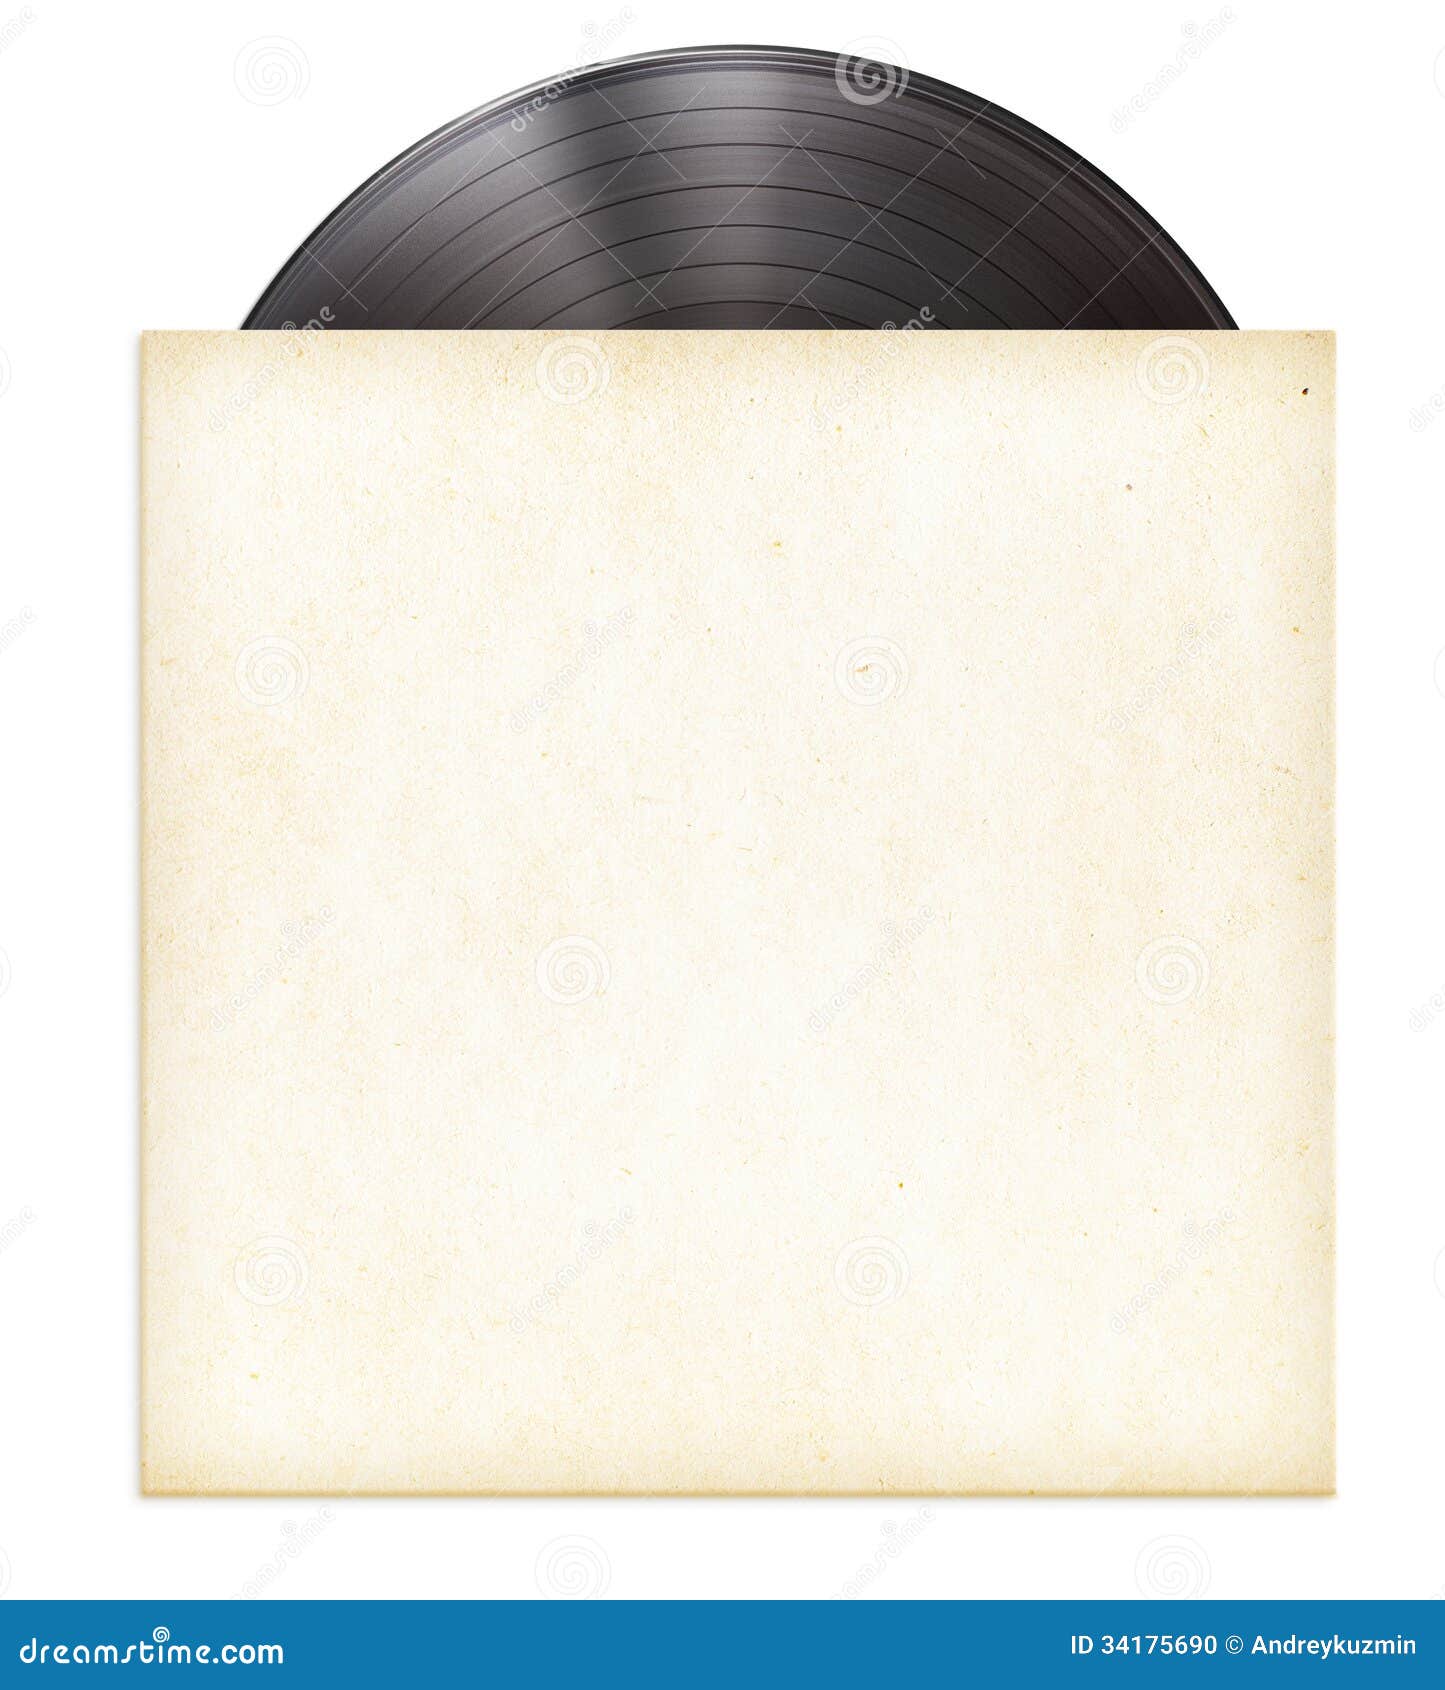 vinyl record disc lp in paper sleeve